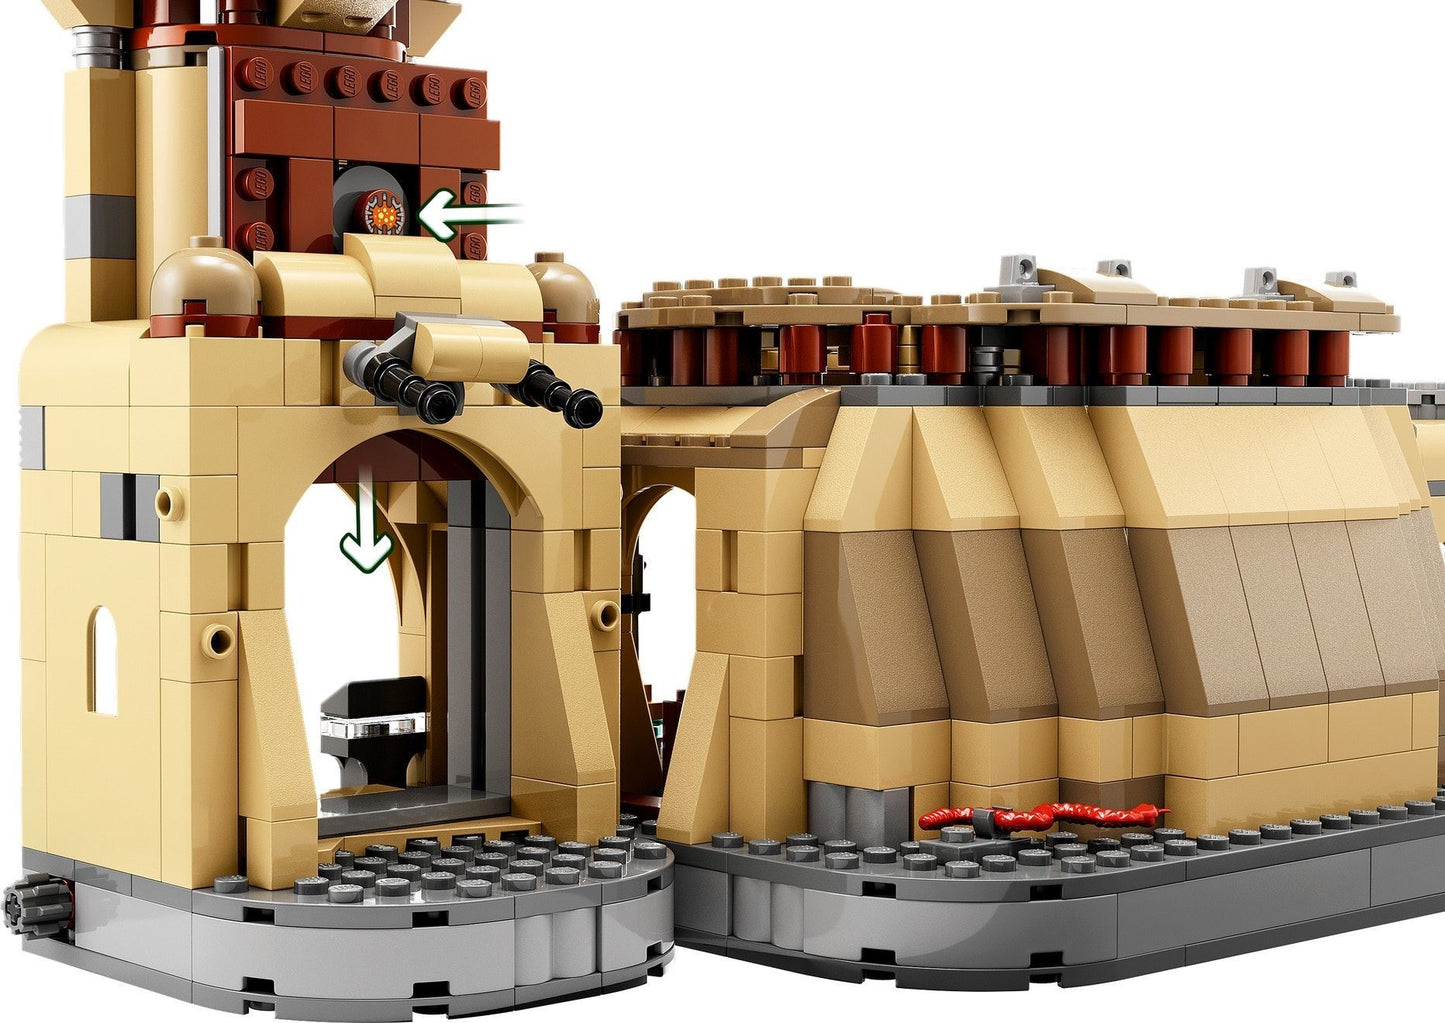 LEGO® Star Wars™ - Sala tronului lui Boba Fett 75326, 732 piese